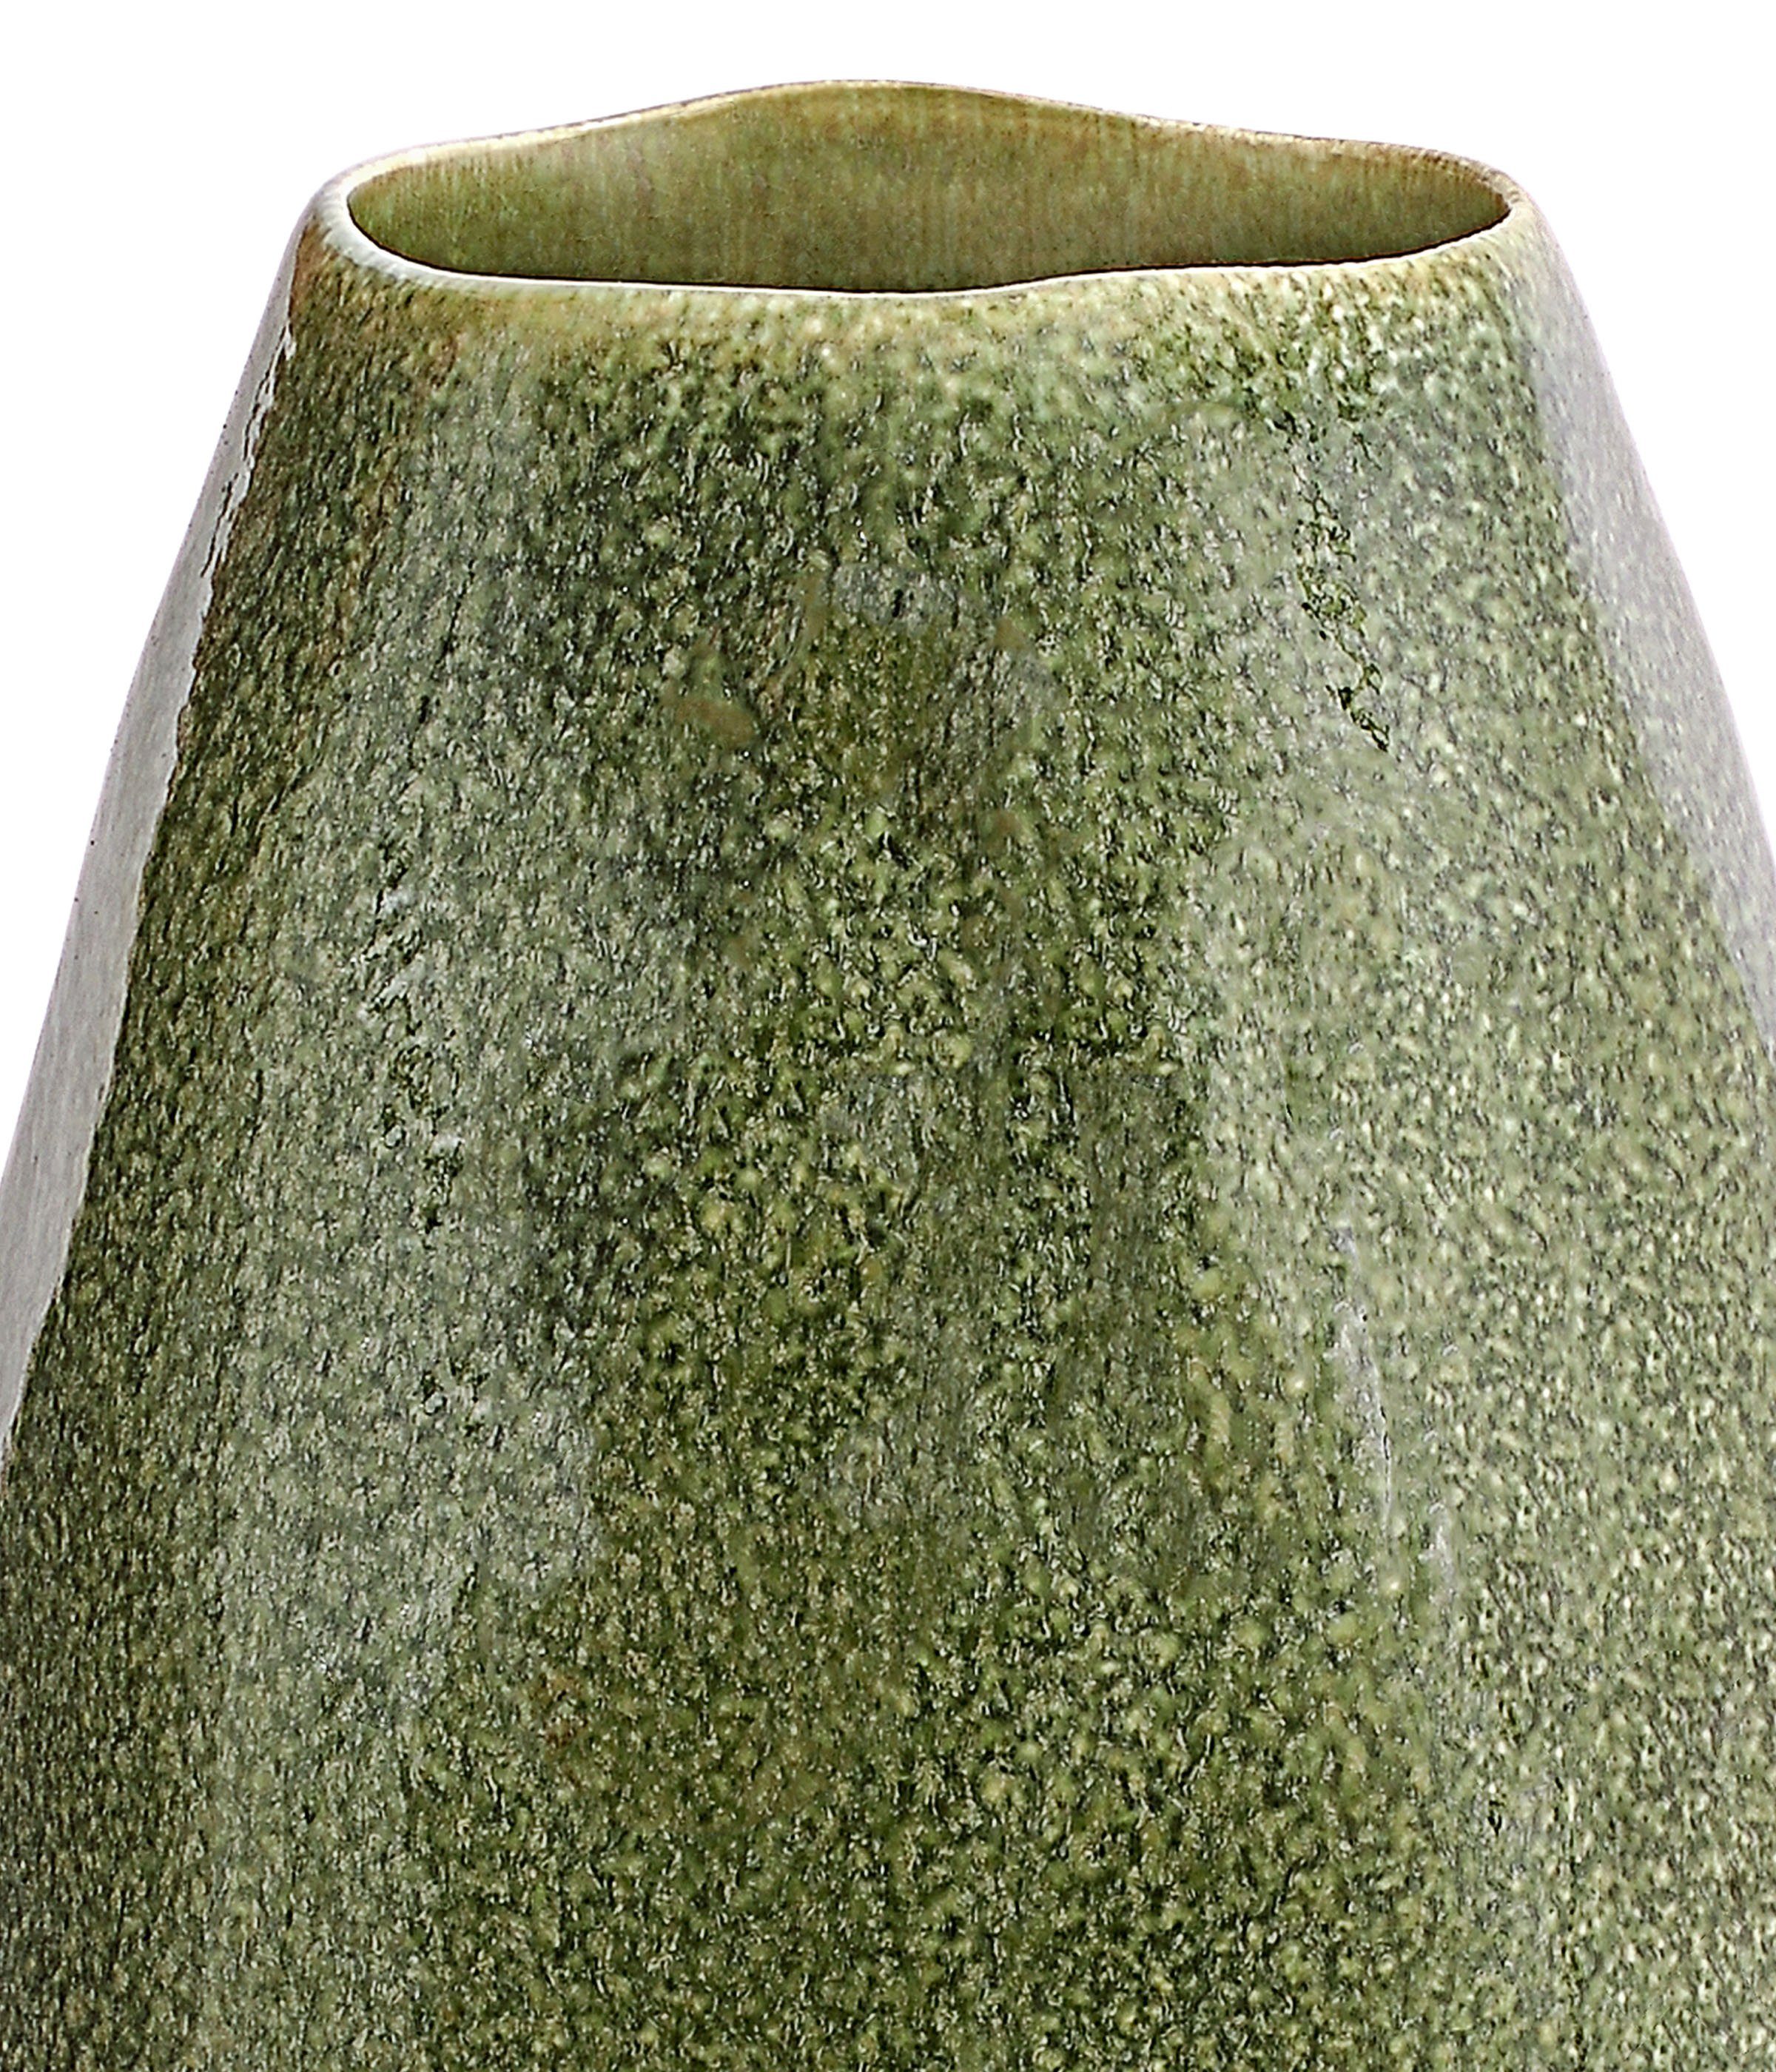 Blumenvase Übertopf oder Keramik, dunkelgrün, lasiert, als handgefertige Vase Dehner Linn, Übertopf